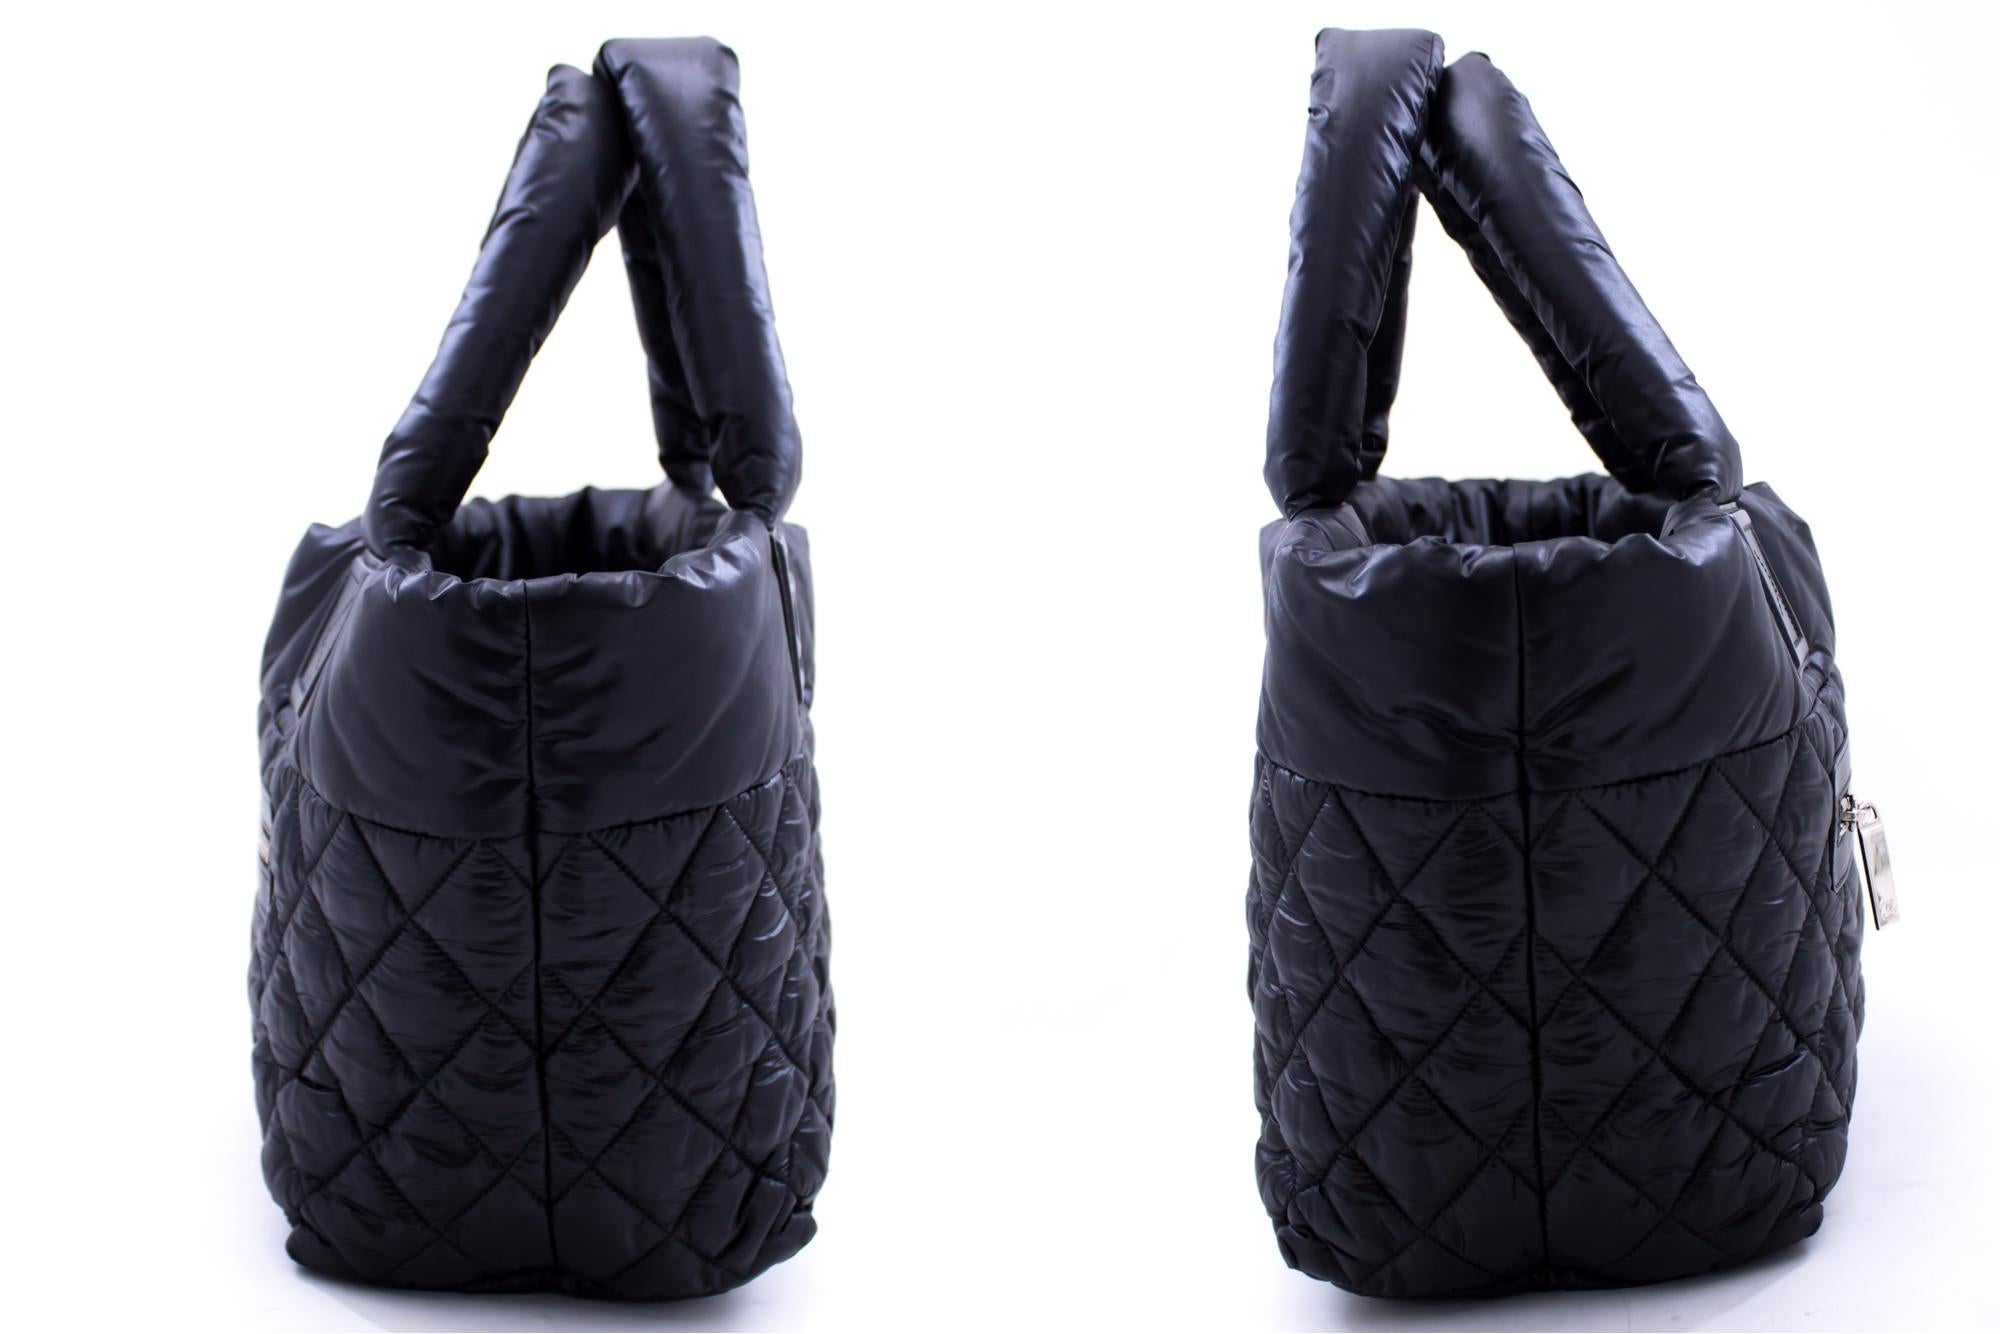 CHANEL Coco Cocoon Nylon Tote Bag Handbag Black Bordeaux Leather 1